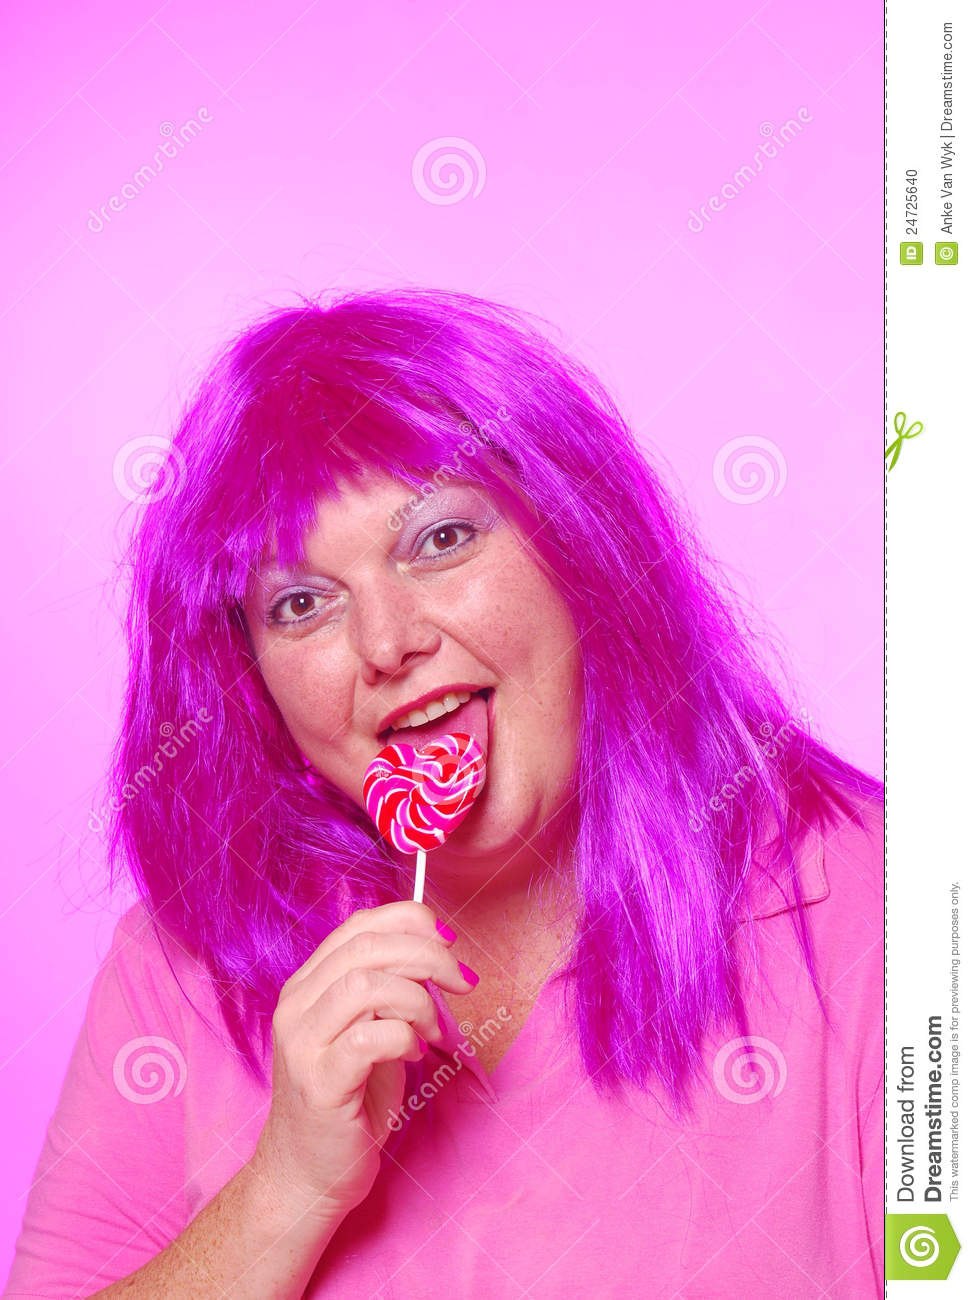 What is a lollipop girl?